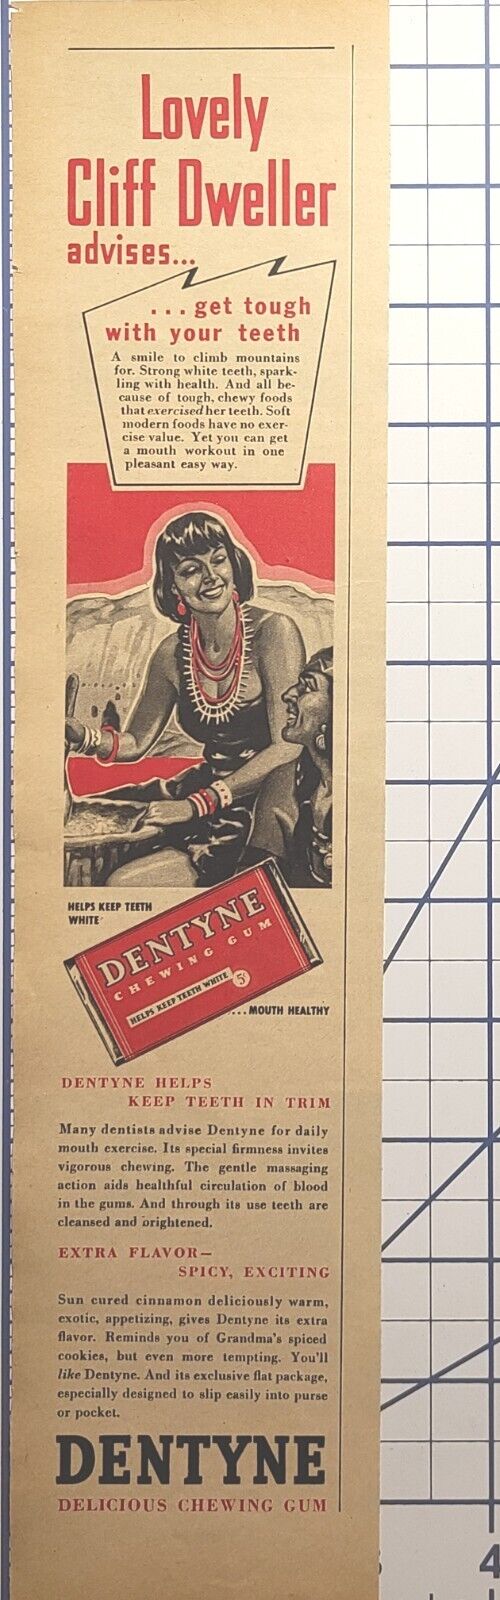 Dentyne Chewing Gum Lovely Cliff Dweller Woman White Teeth Vintage Print Ad 1939